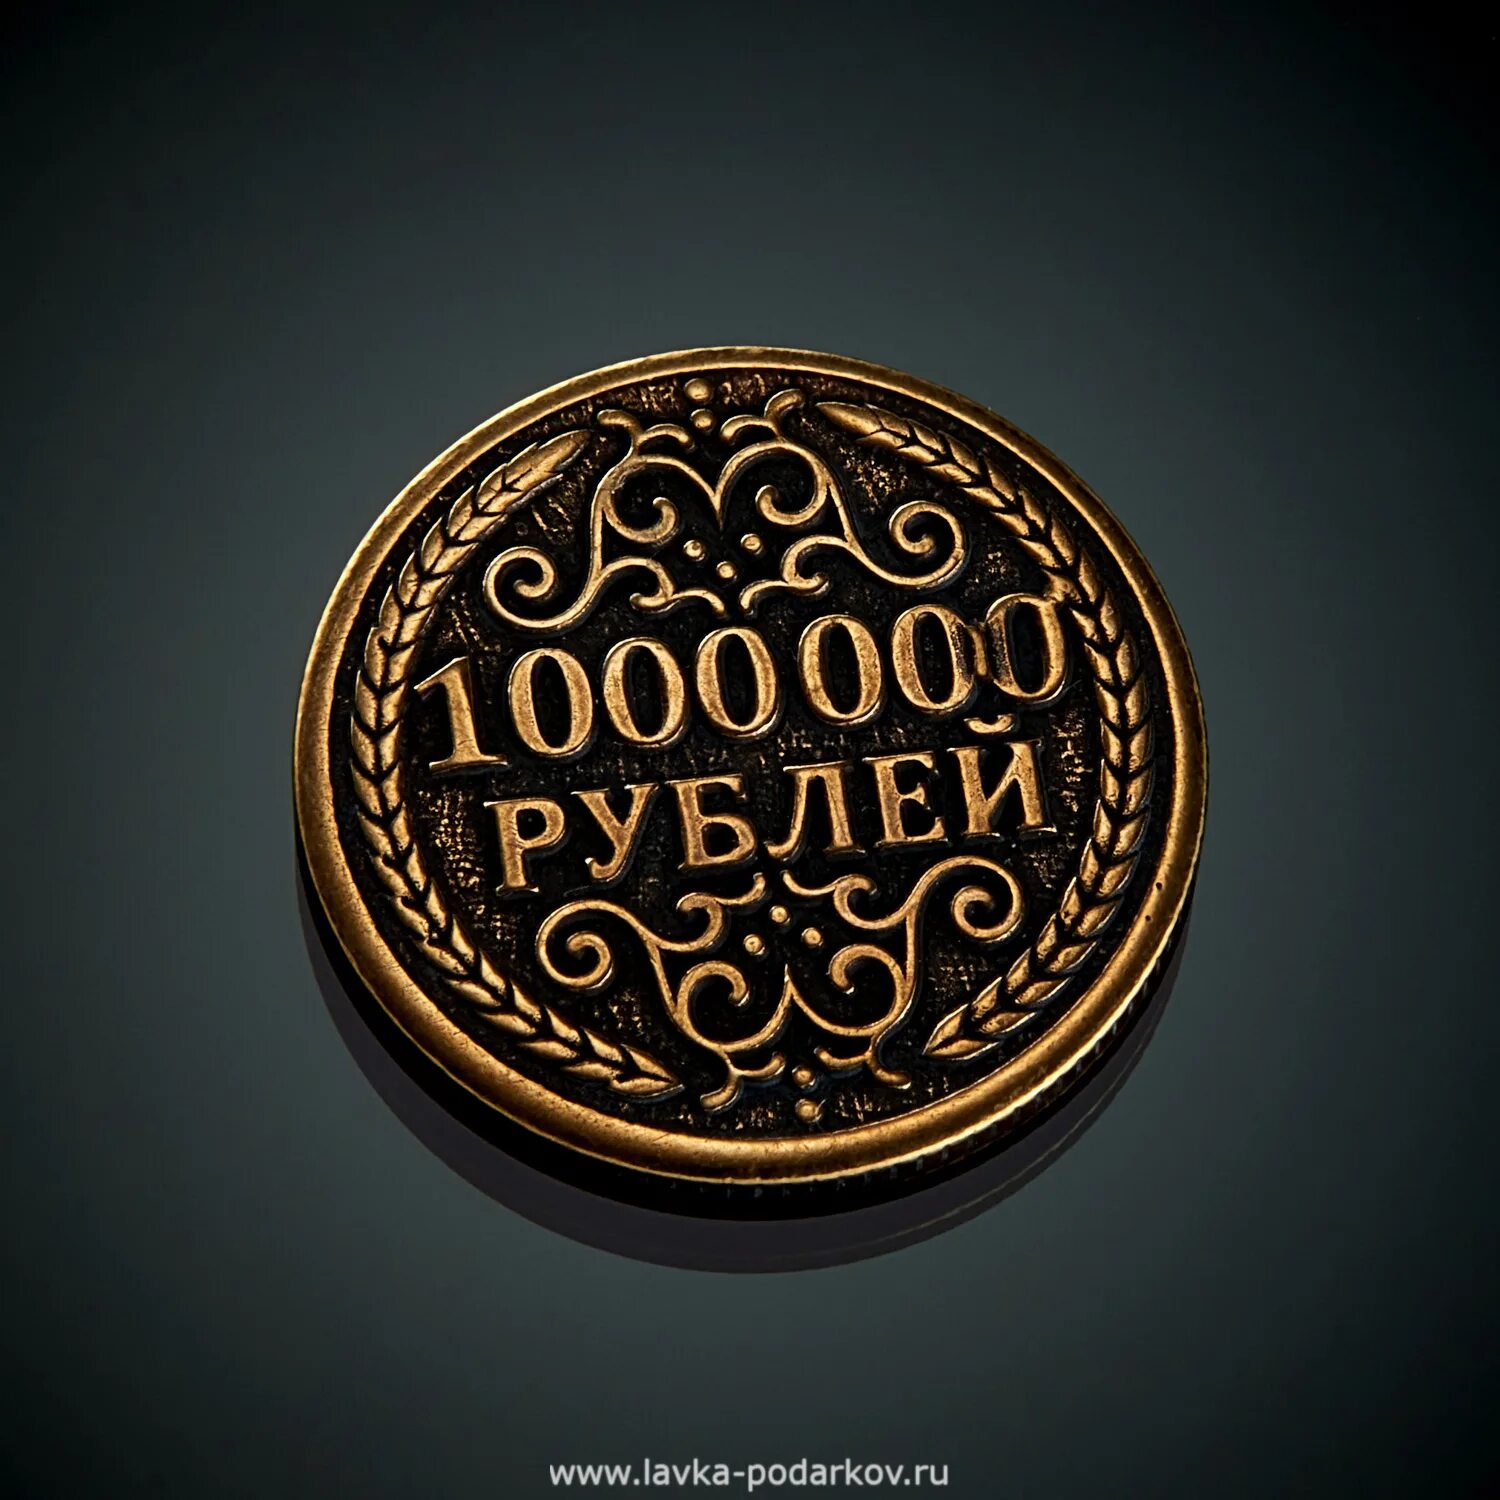 Цена 1000000 рублей. Монета миллион рублей. Сувенирная монета 1000000 рублей. Железная монета 1000000 рублей. Монета 1 000 000 рублей.